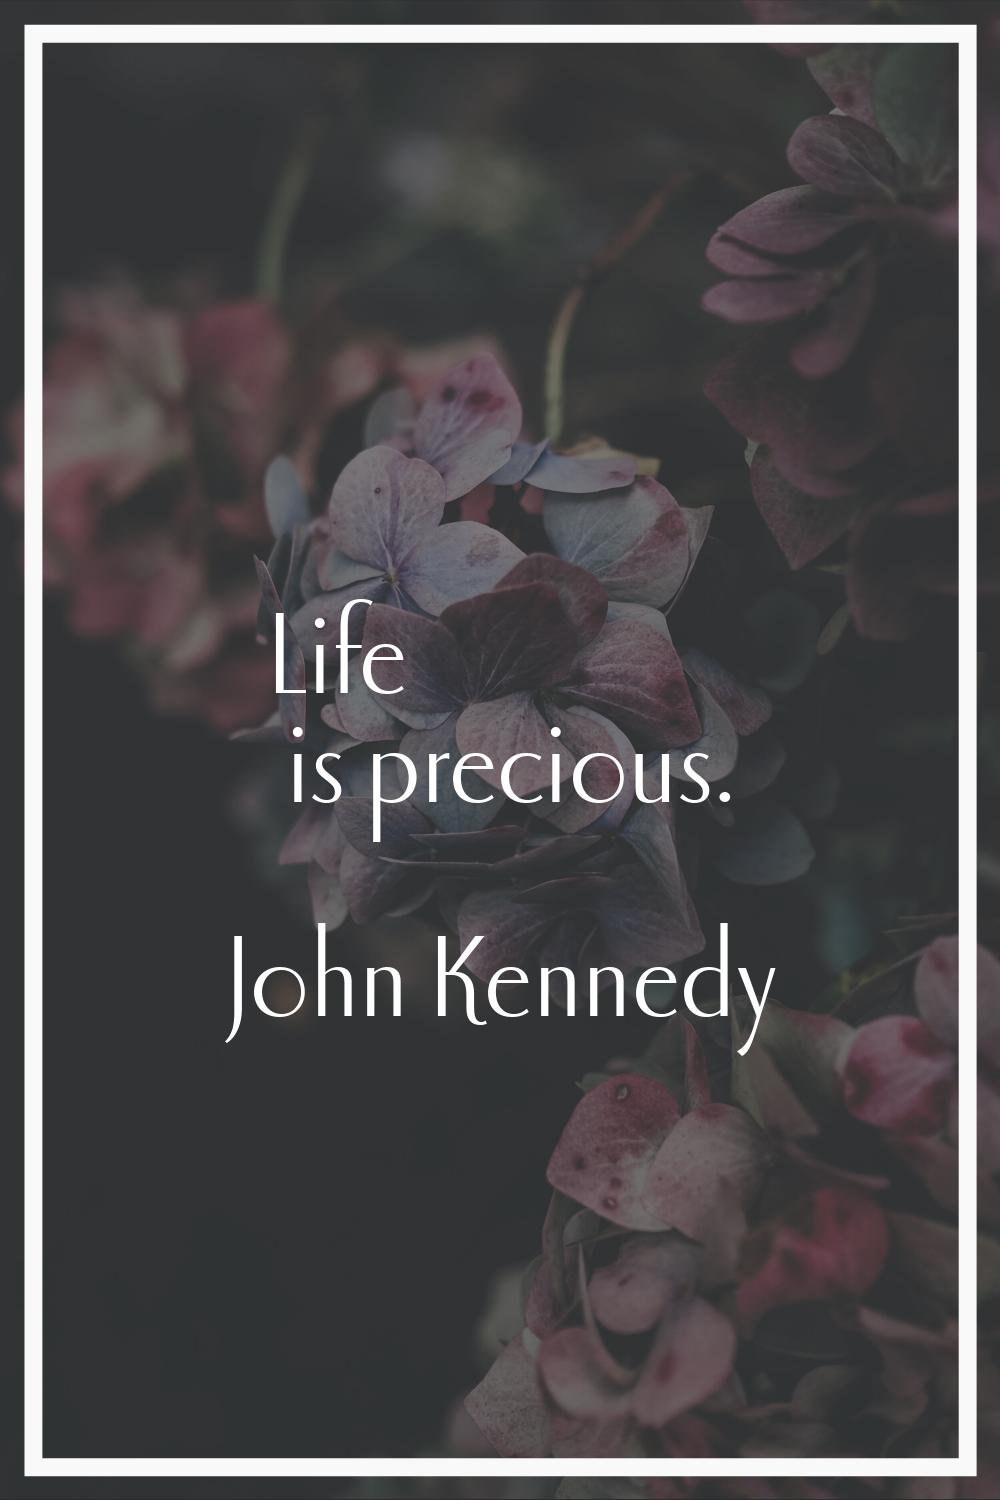 Life is precious.